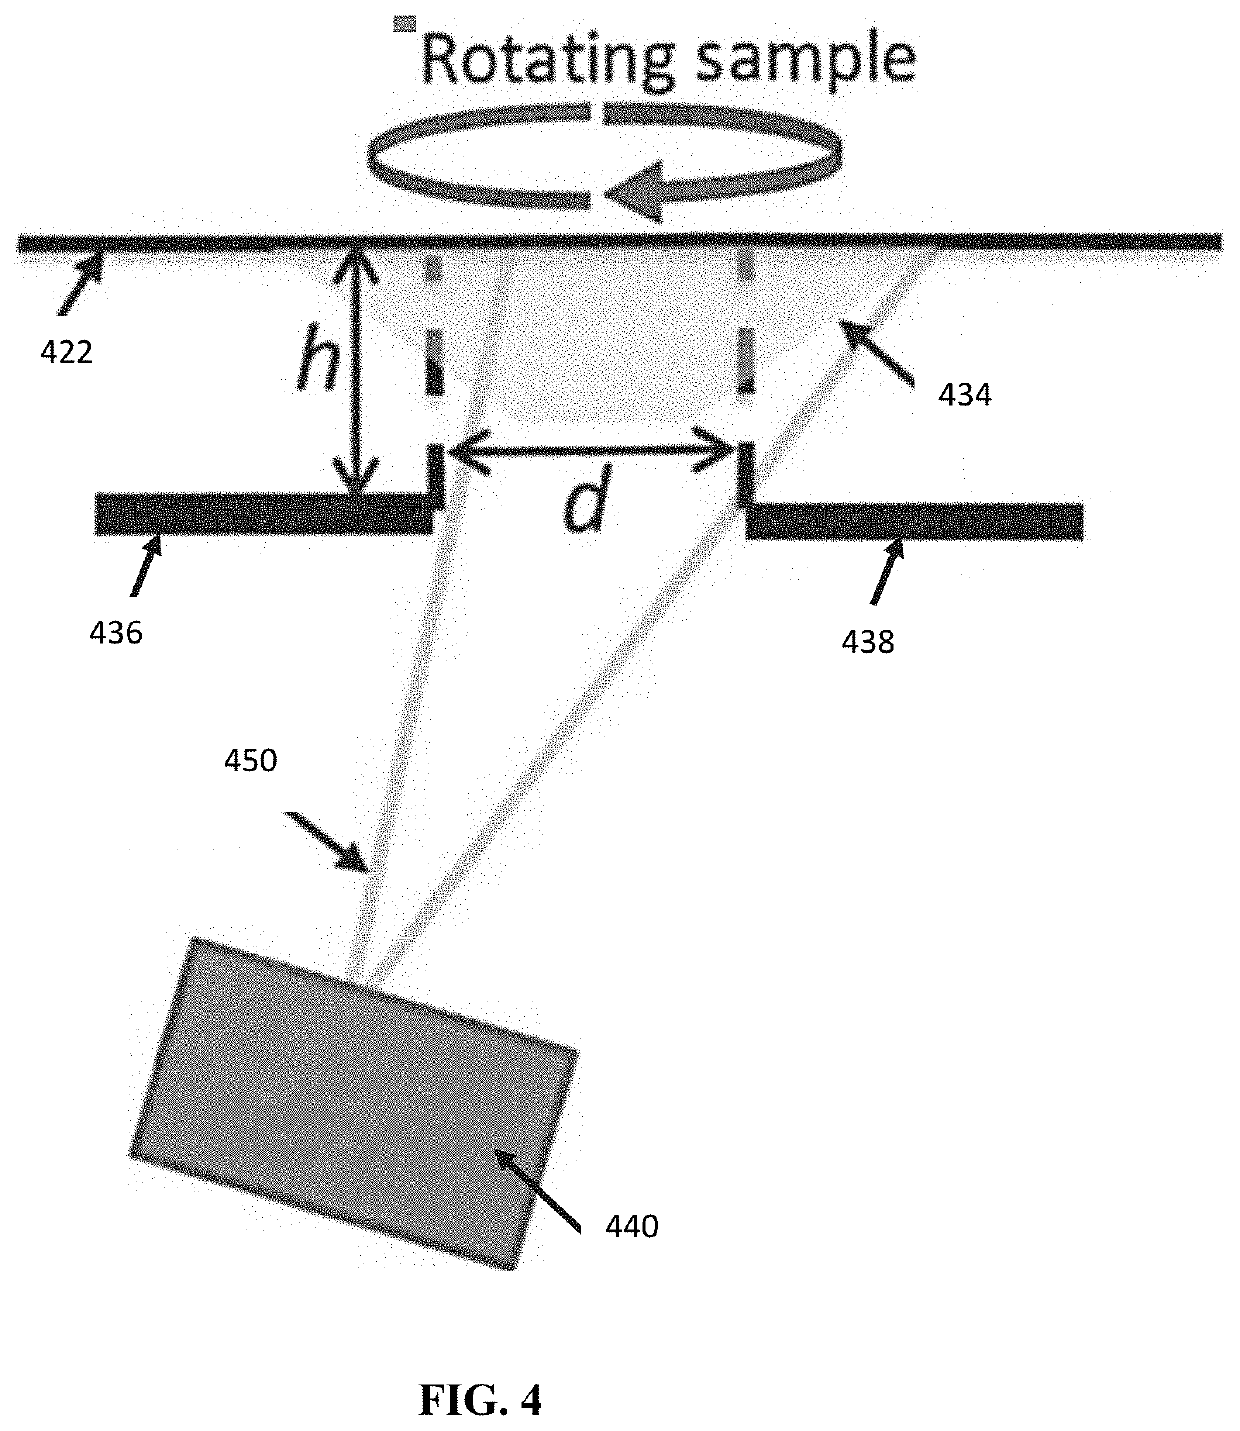 Chalcogenide glass waveguides for refractive non-mechanical beam steerer